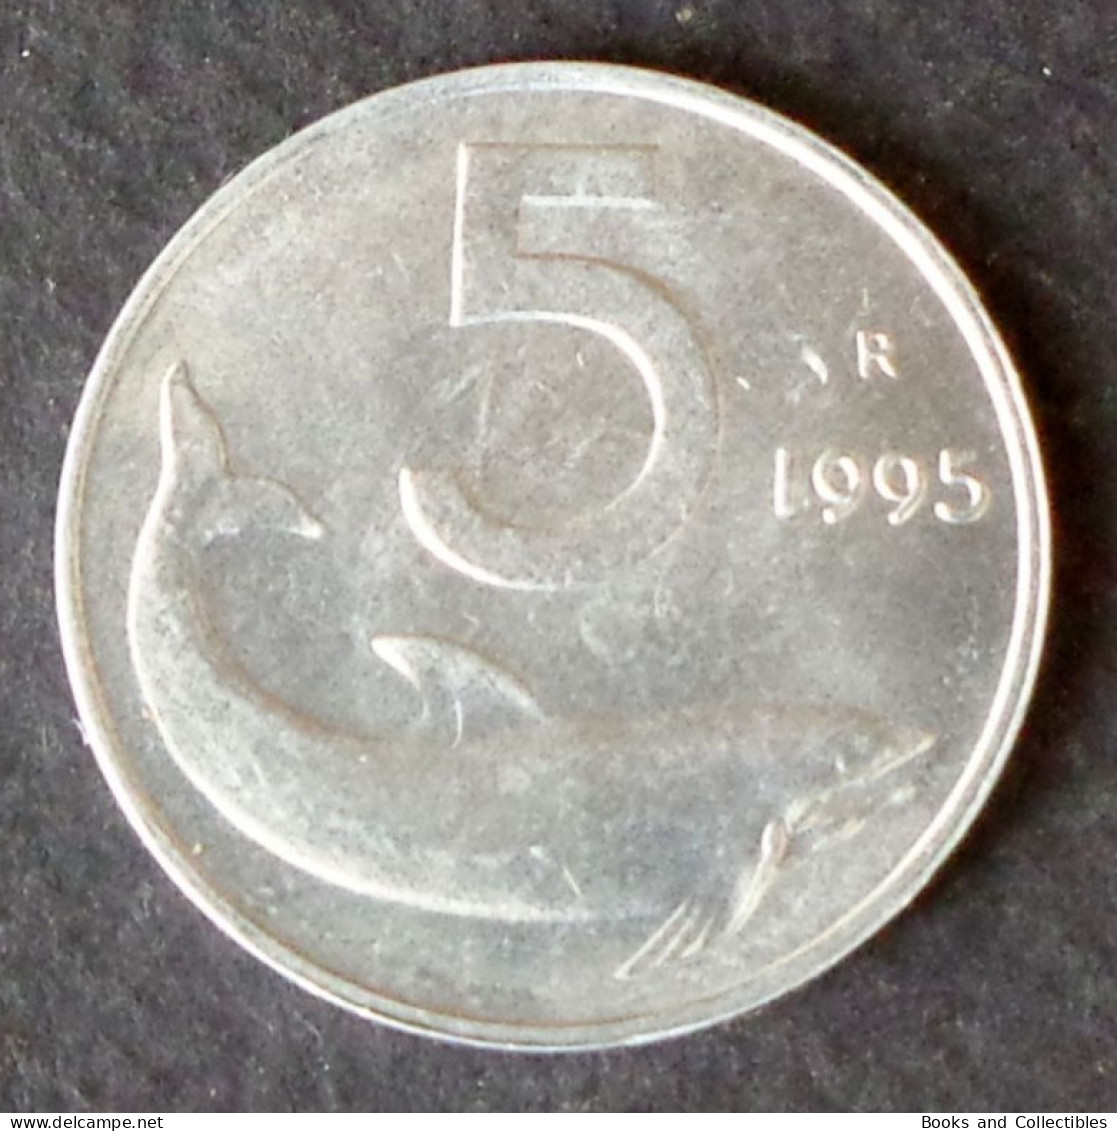 ITALY - 5 Lira 1995 - KM# 92 * Ref. 0200 - 5 Liras